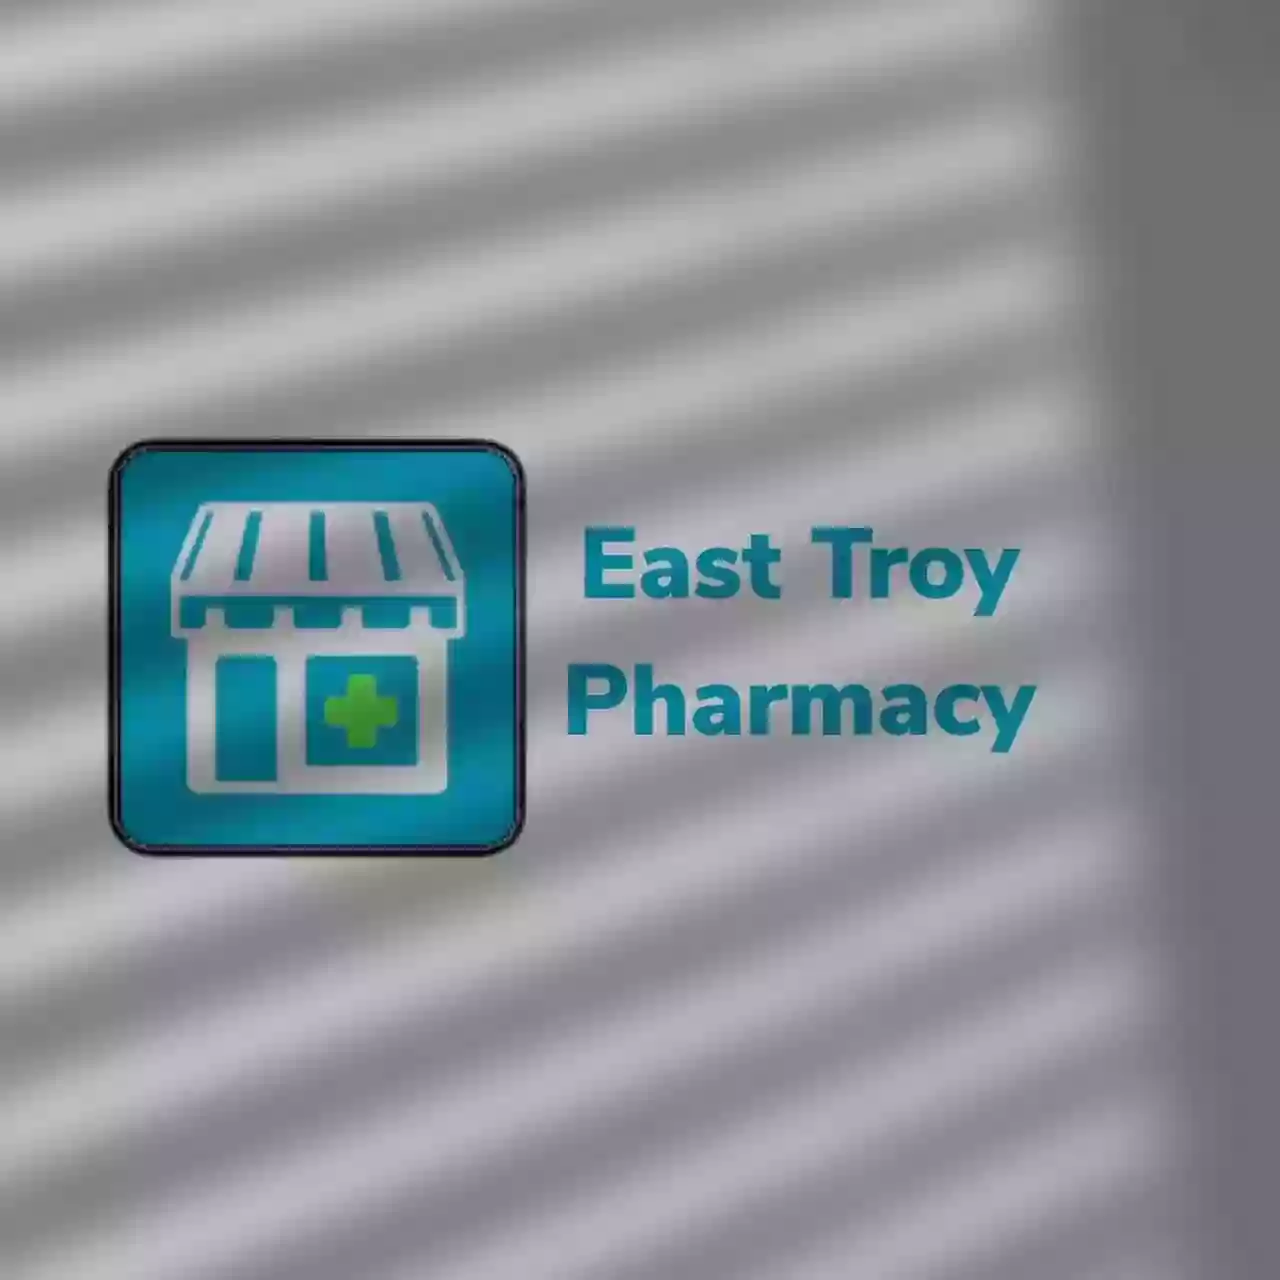 East Troy Pharmacy